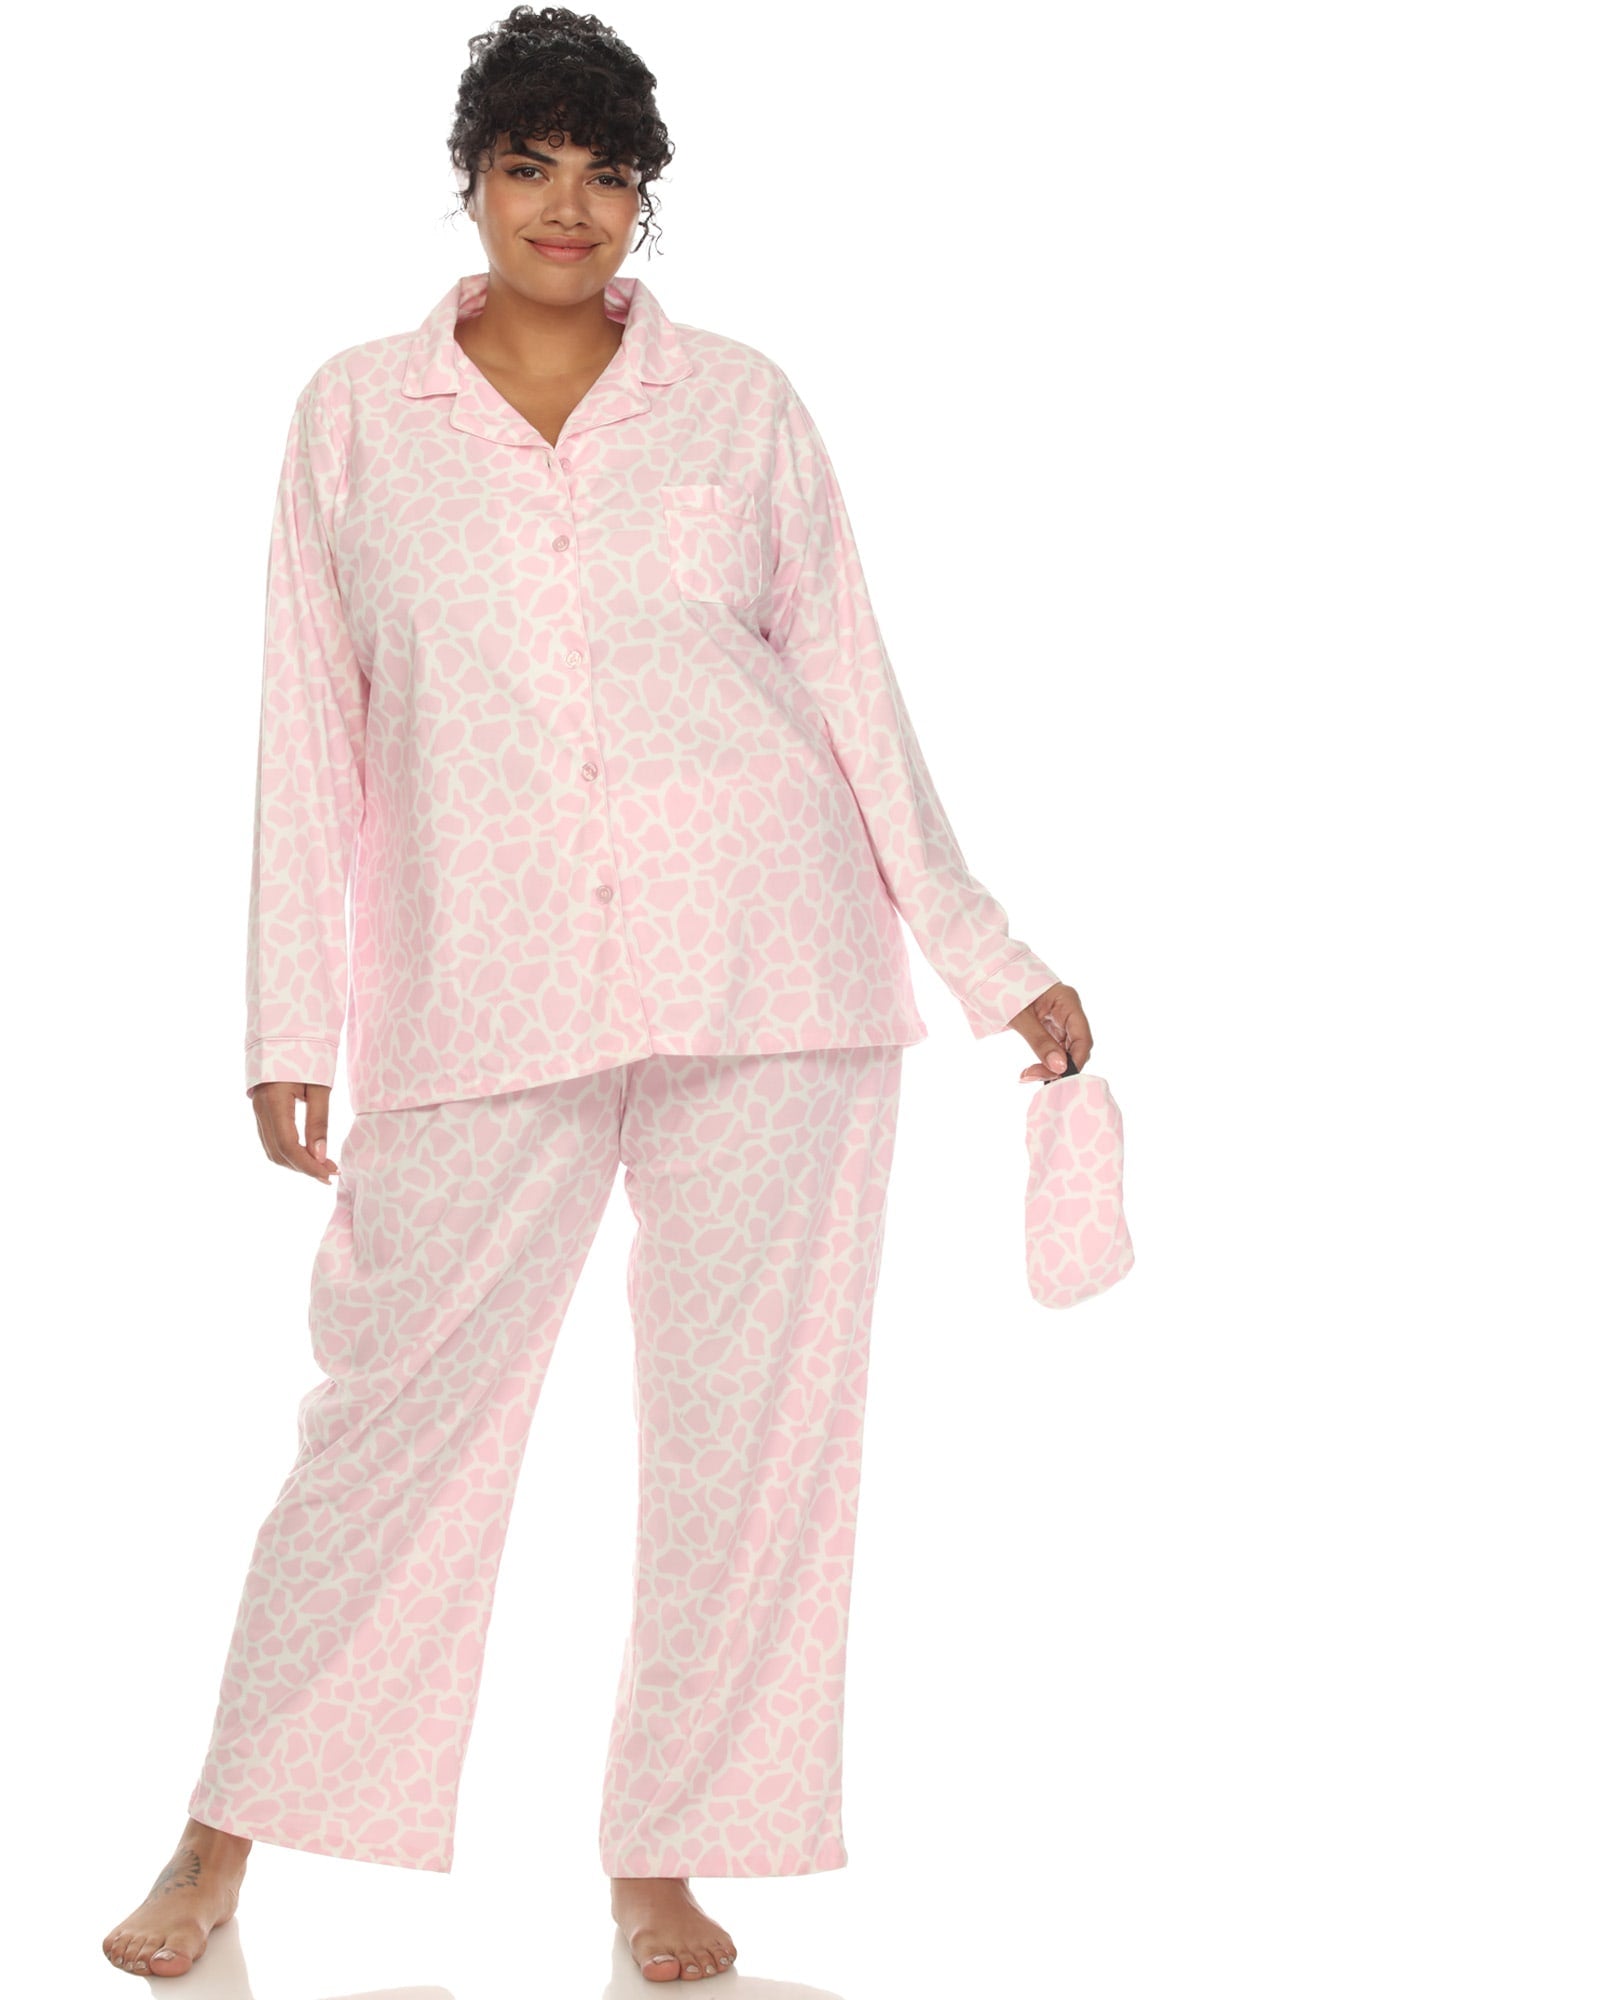 Women's Plus Size Short Sleeve Top And Pants Pajama Set Pink 3x